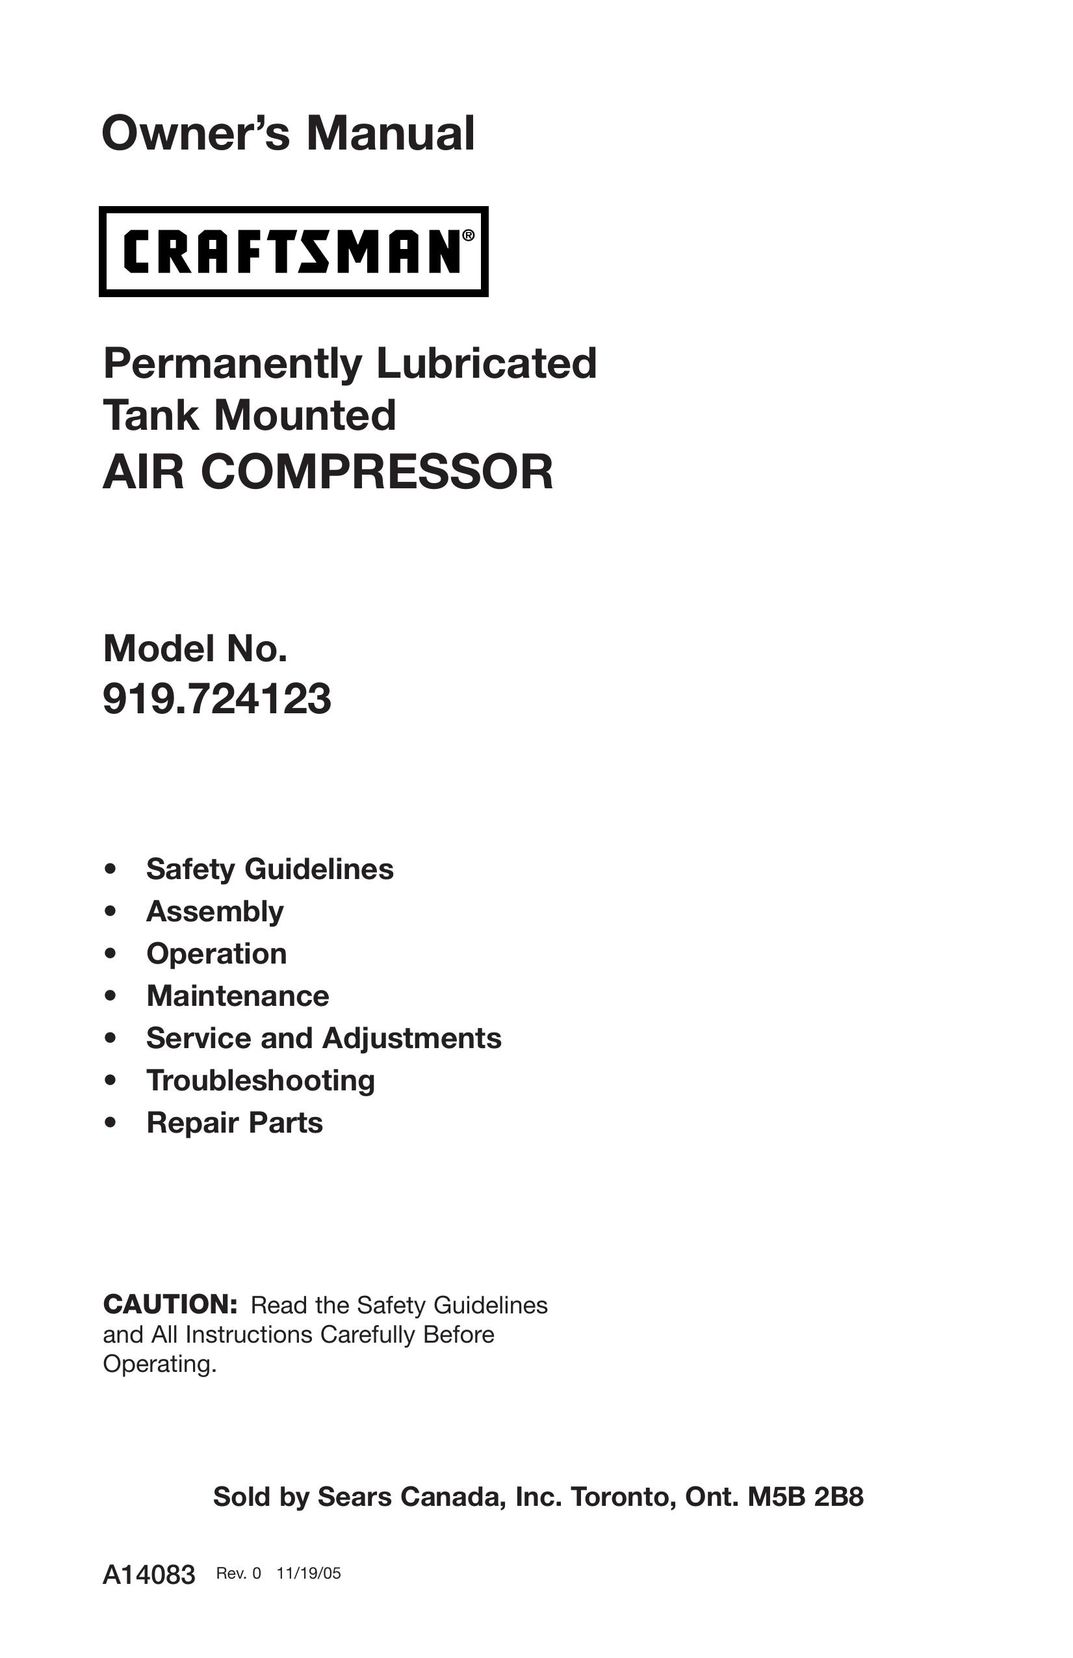 Craftsman 919.724123 Air Compressor User Manual